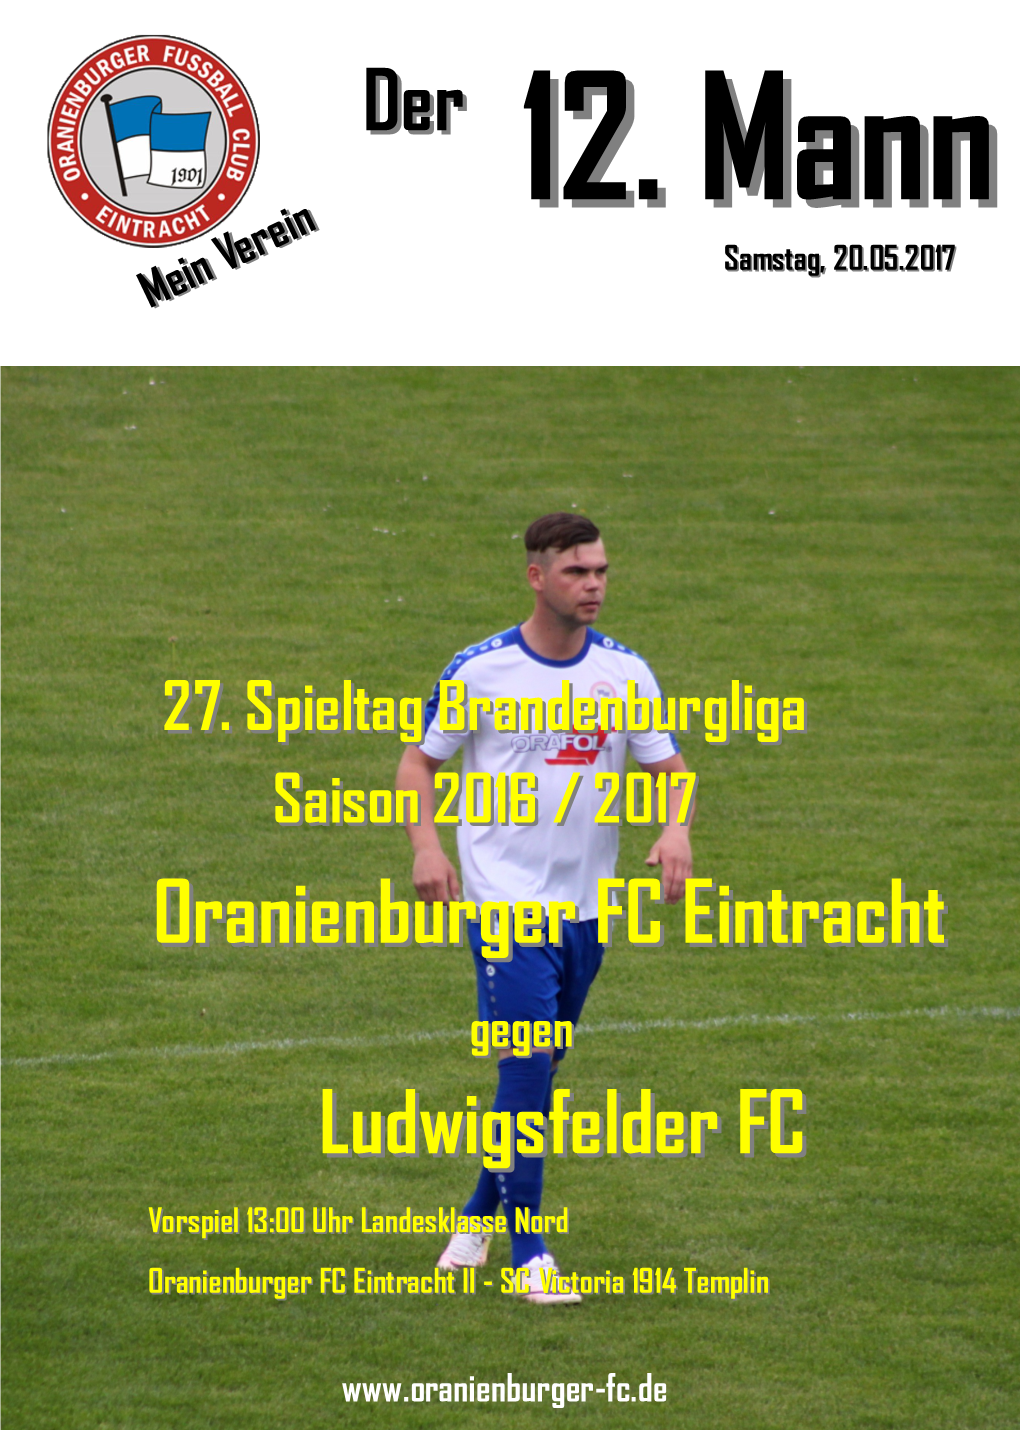 Ludwigsfelder FC Oranienburger FC Eintracht